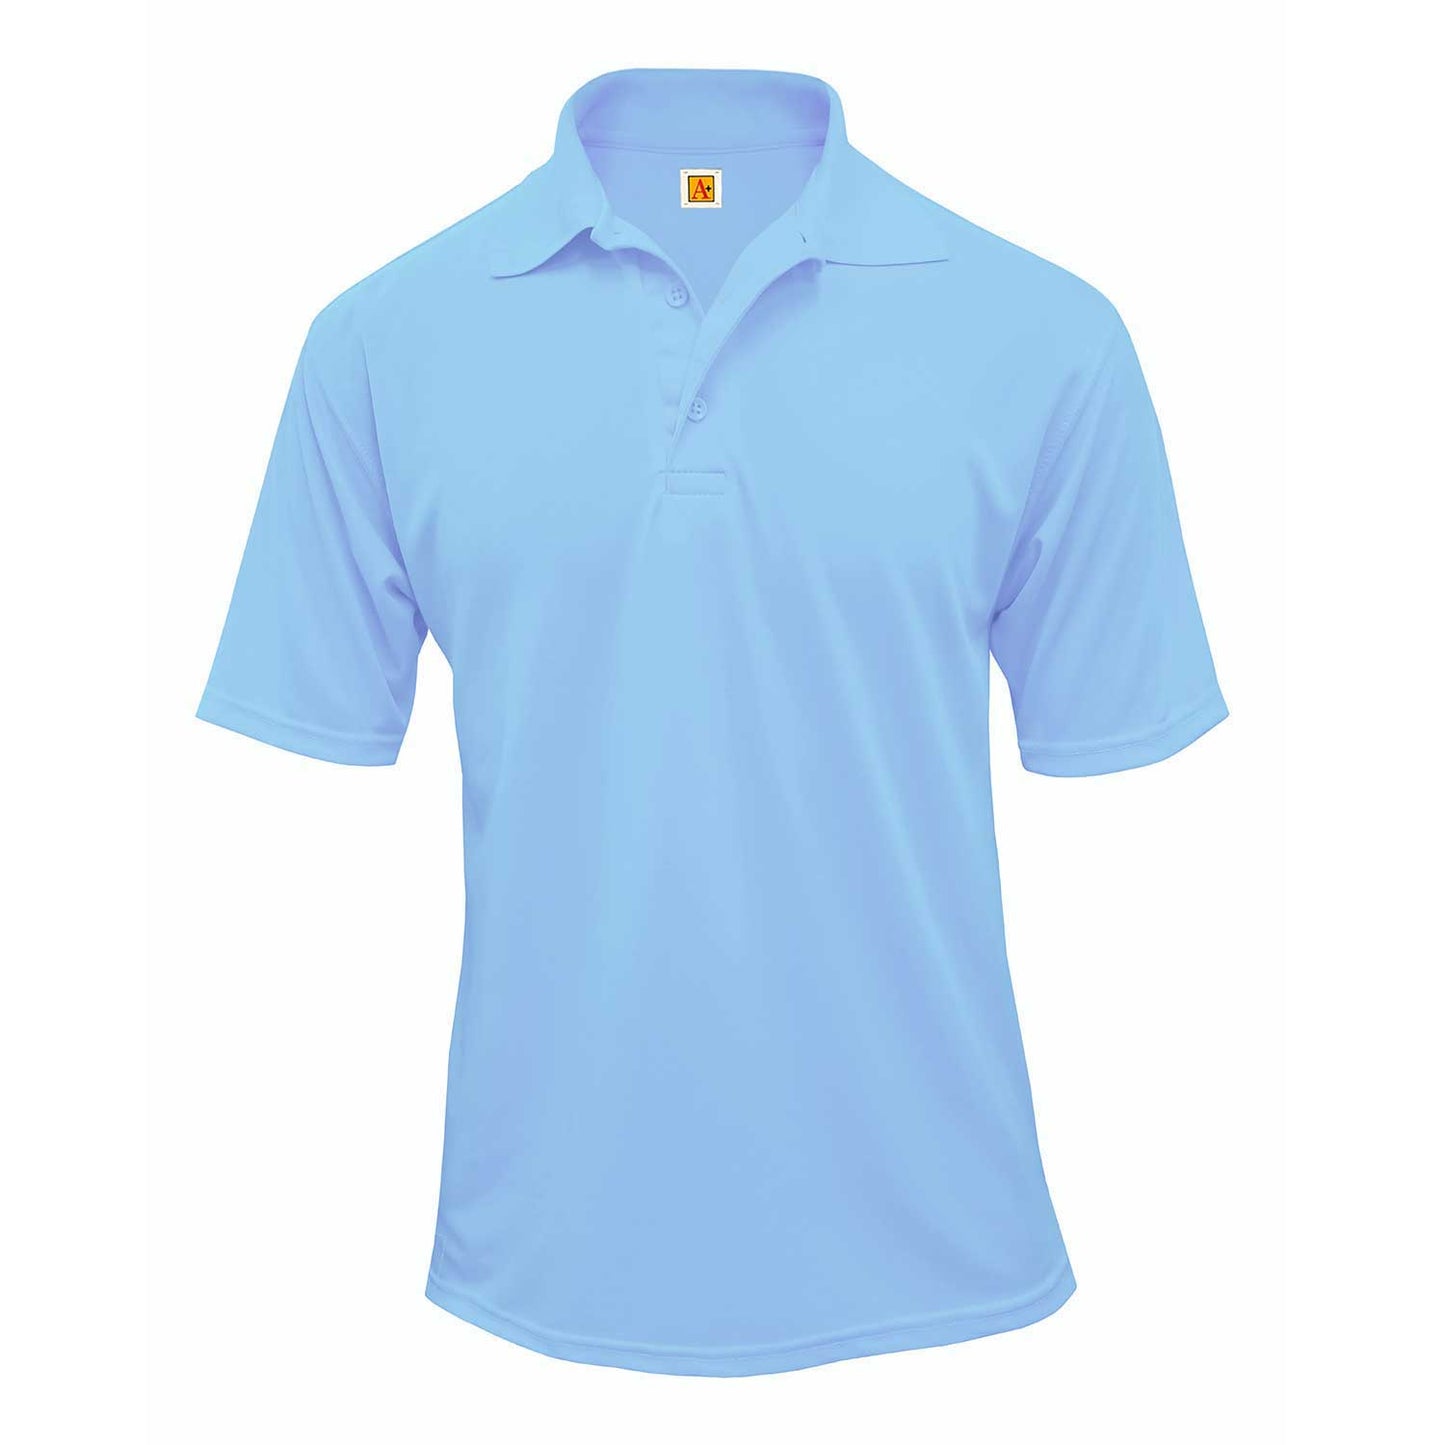 Performance Dri-fit Jersey Knit Short Sleeve Shirt (Unisex) w/Logo - 1112